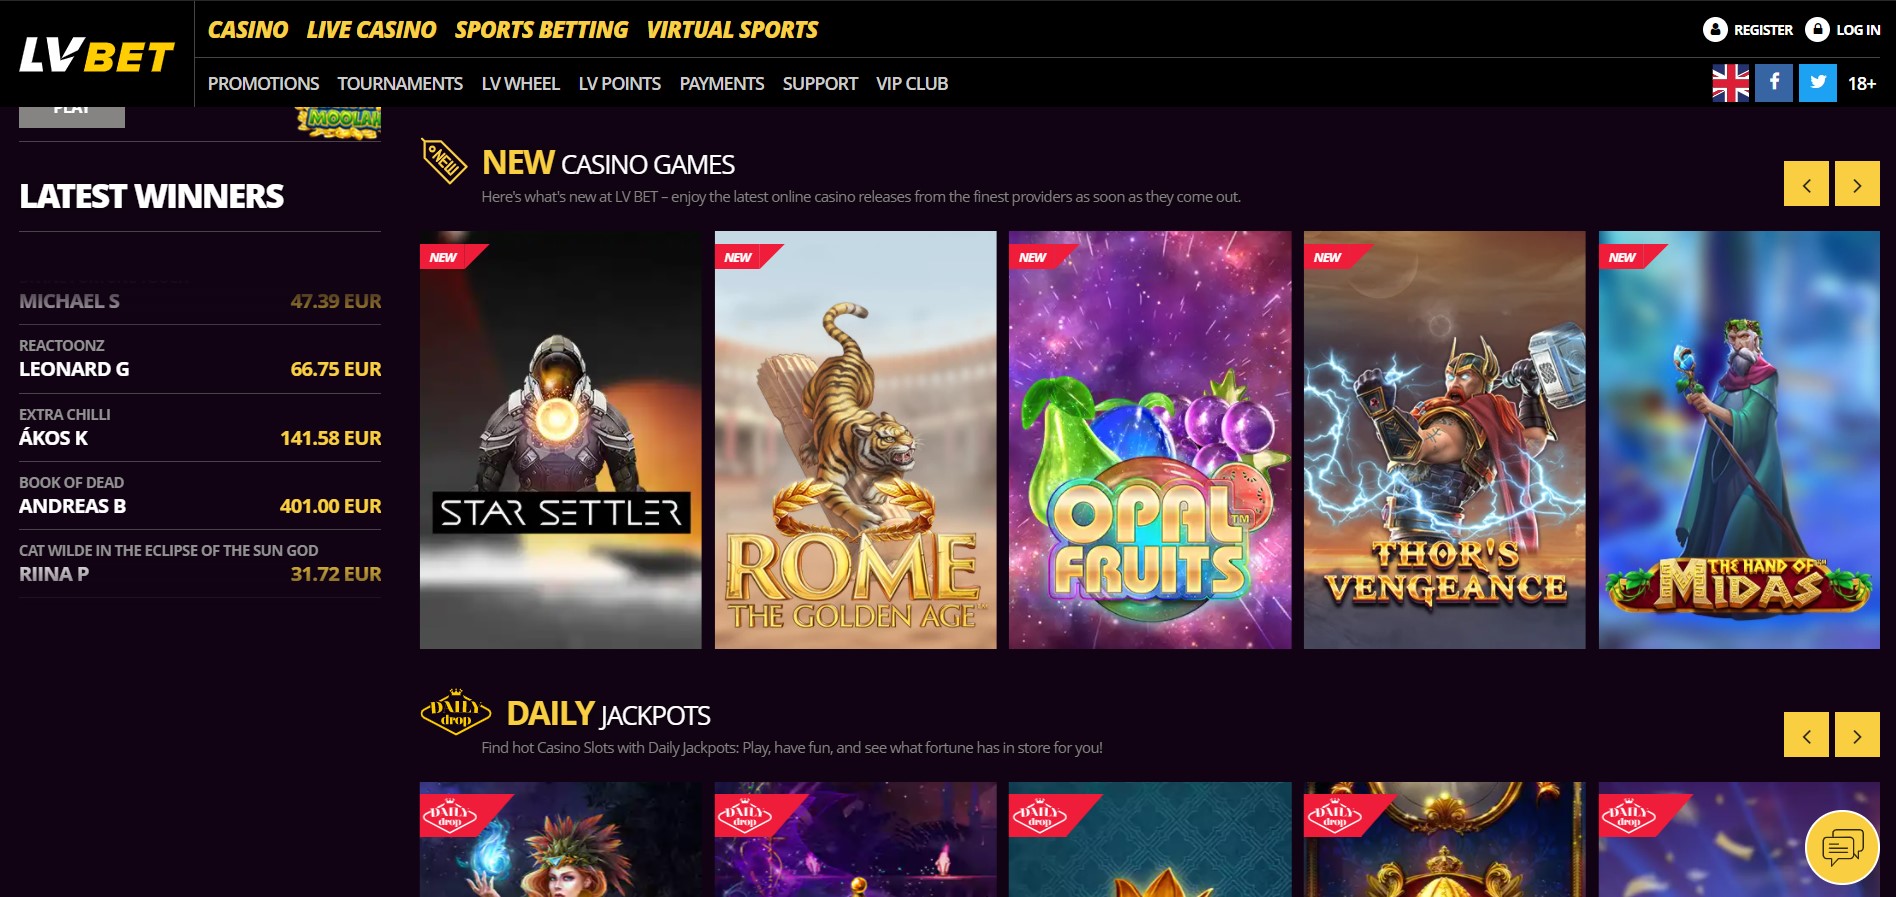 LVBet New Casino Games